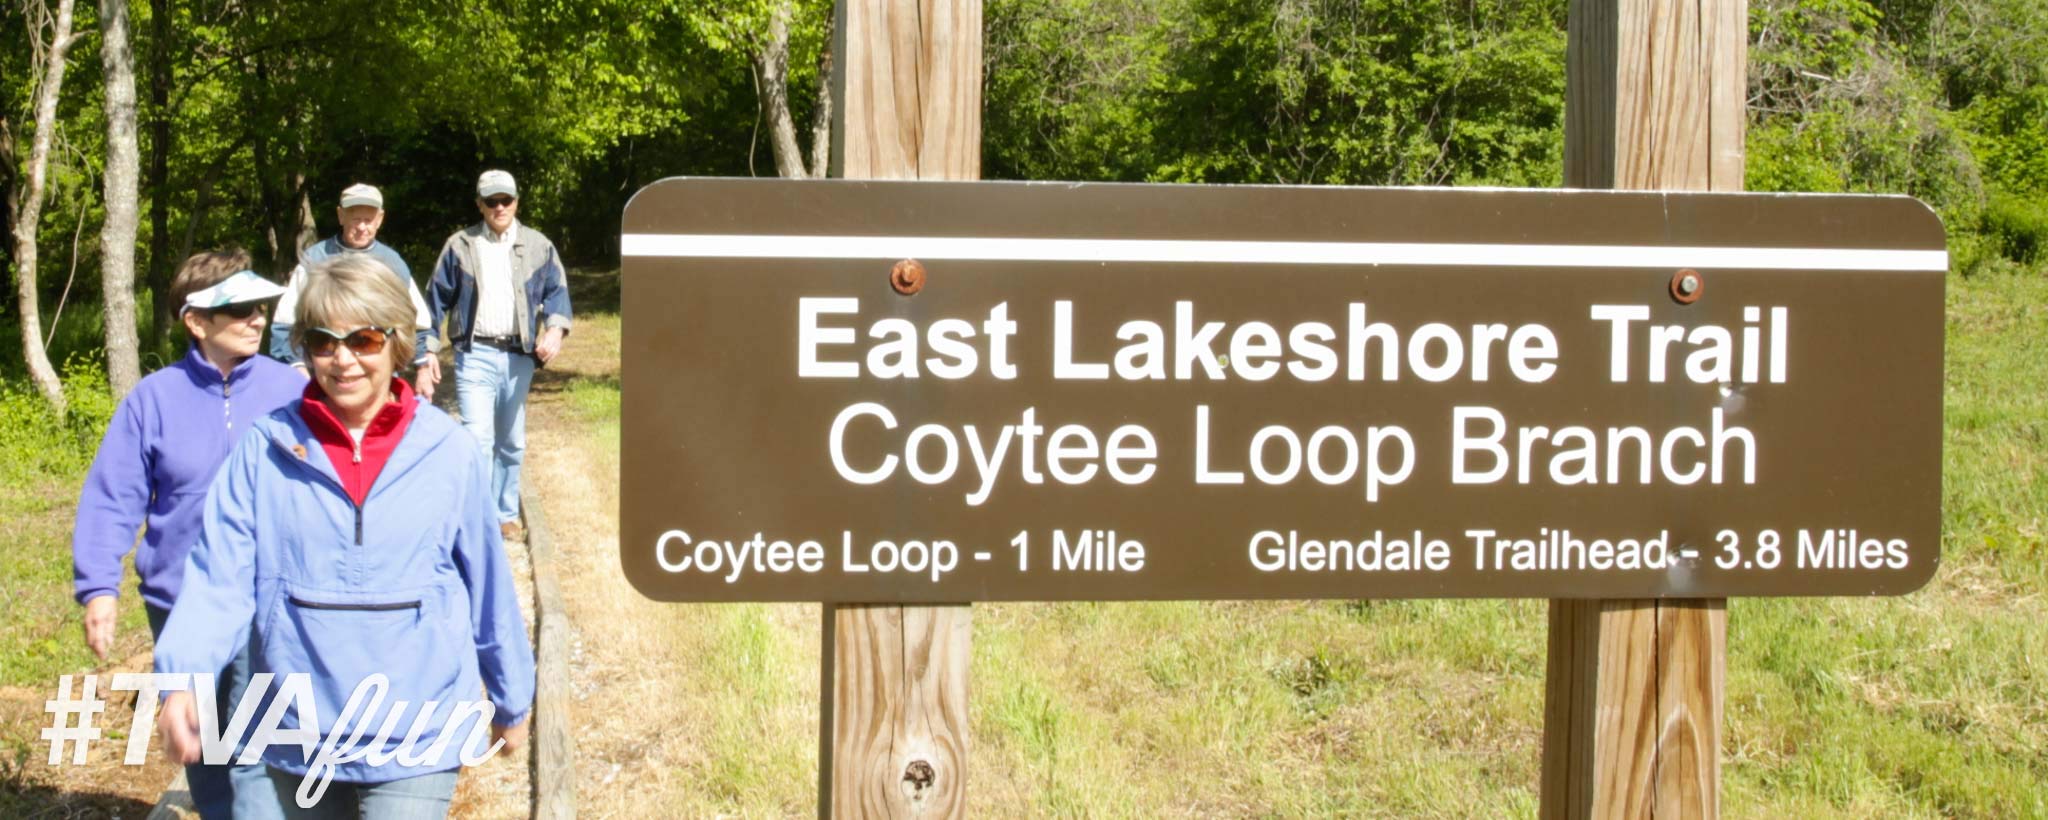 East Lakeshore Trail